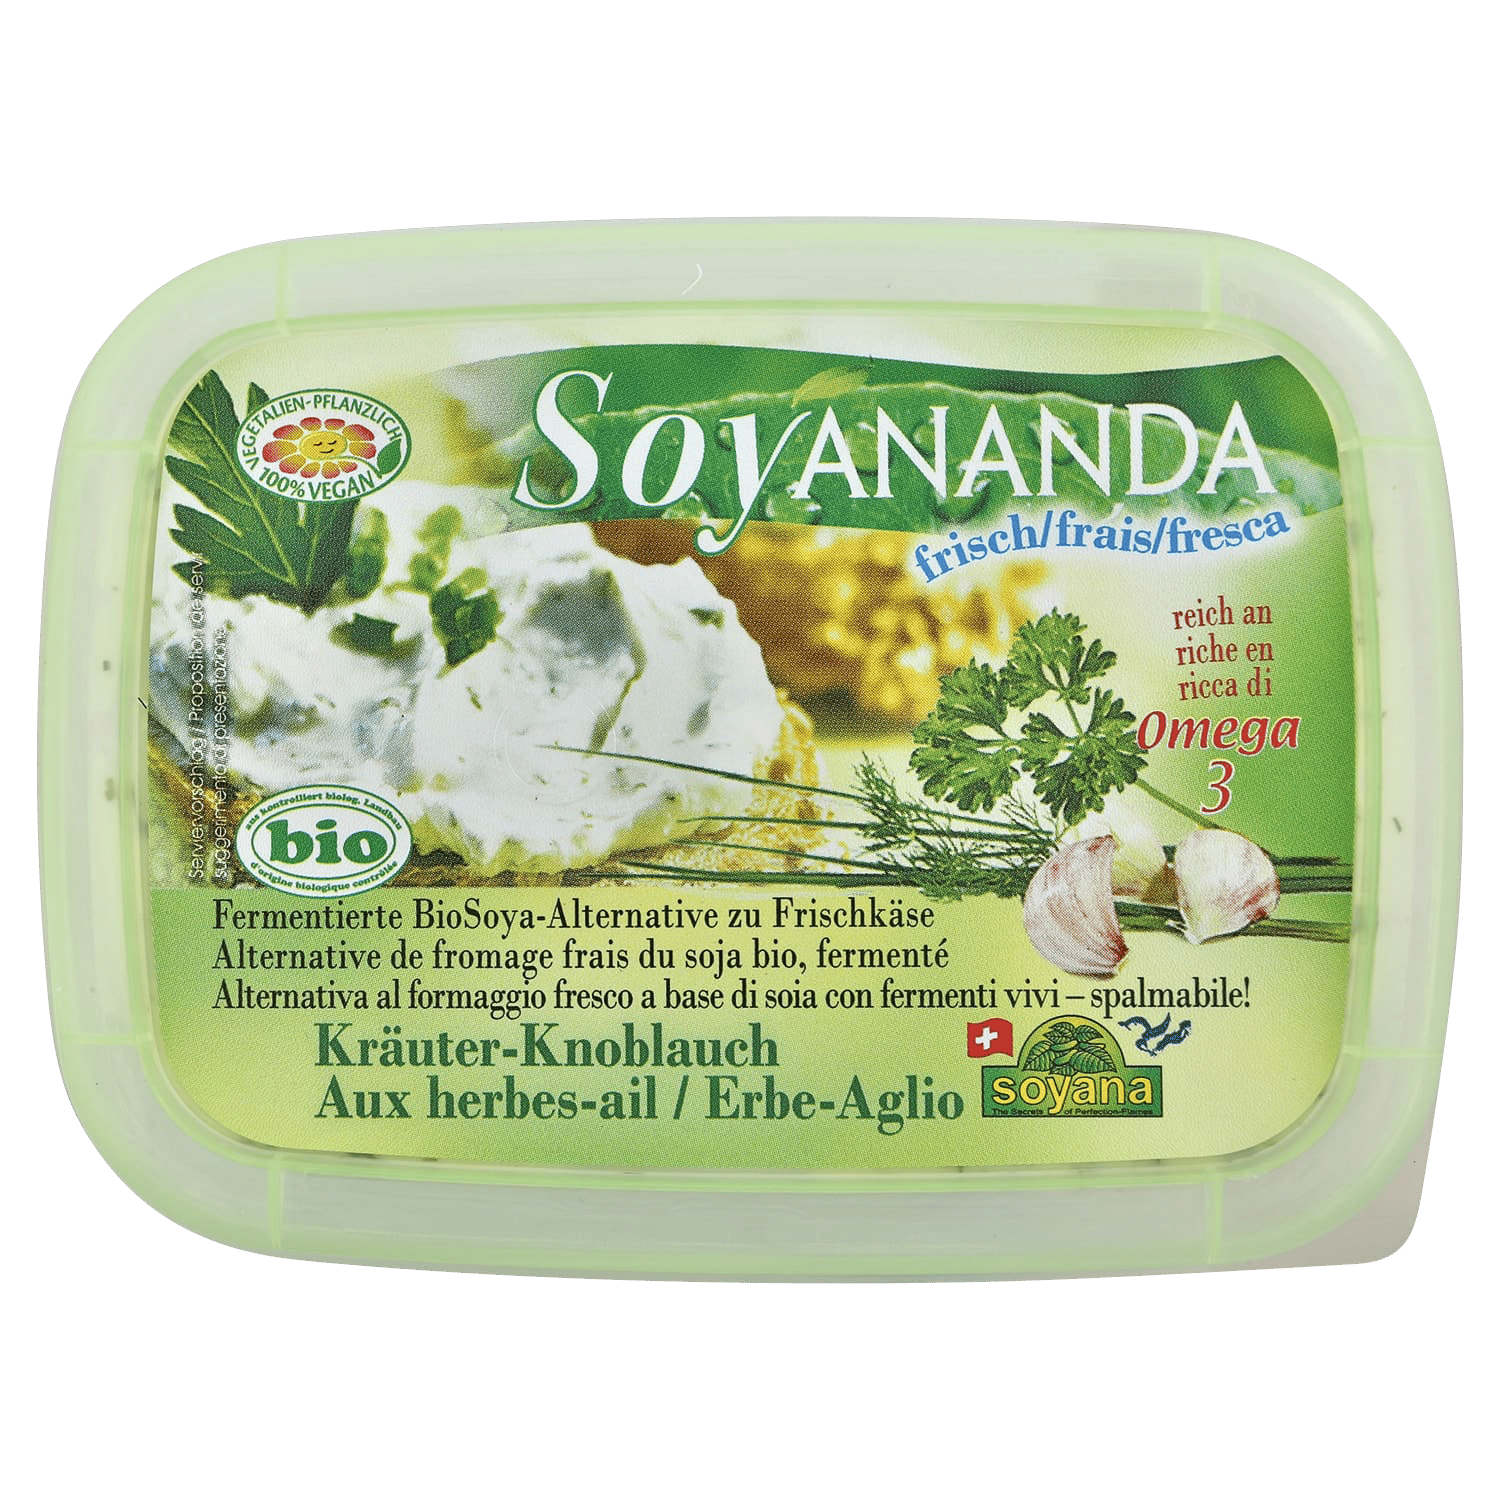 Soyananda Vegane Alternative zu Frischkäse Kräuter-Knoblauch, BIO, 140g